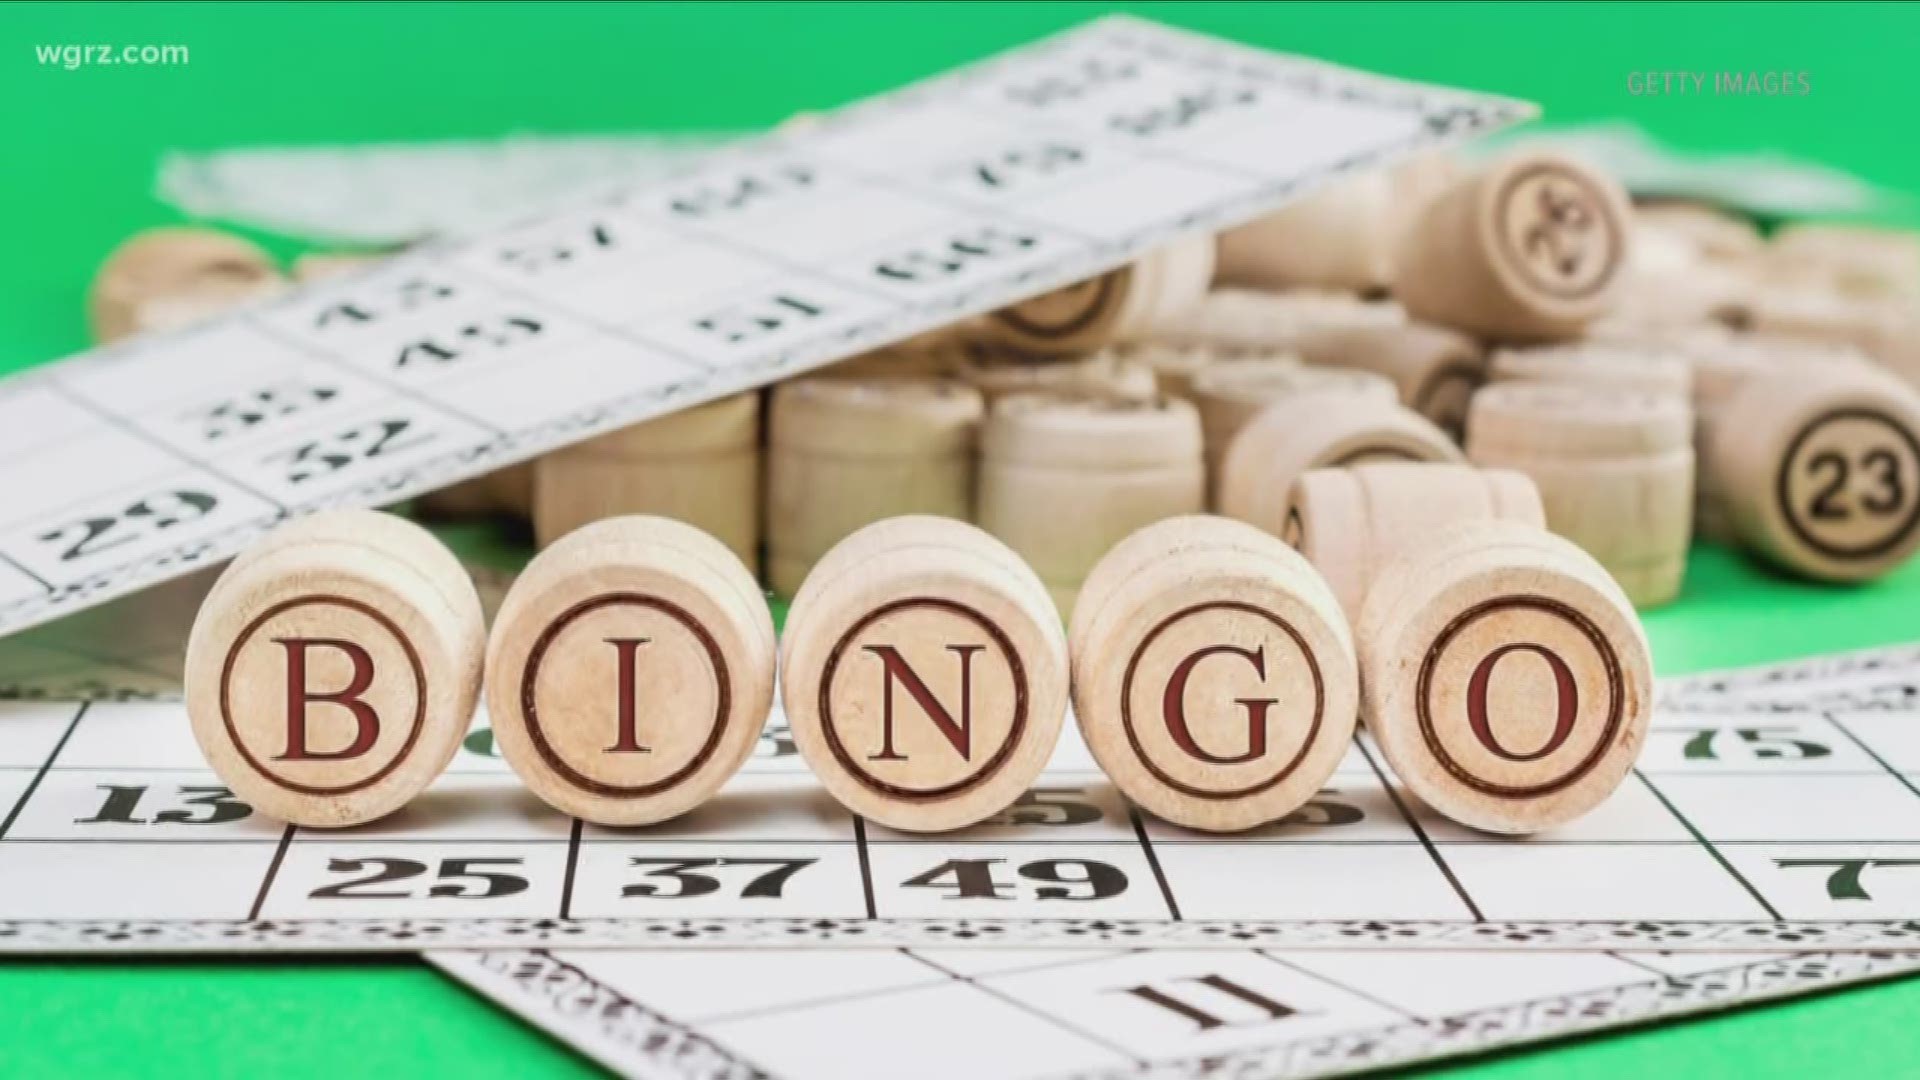 NY Senate votes to let minors play Bingo